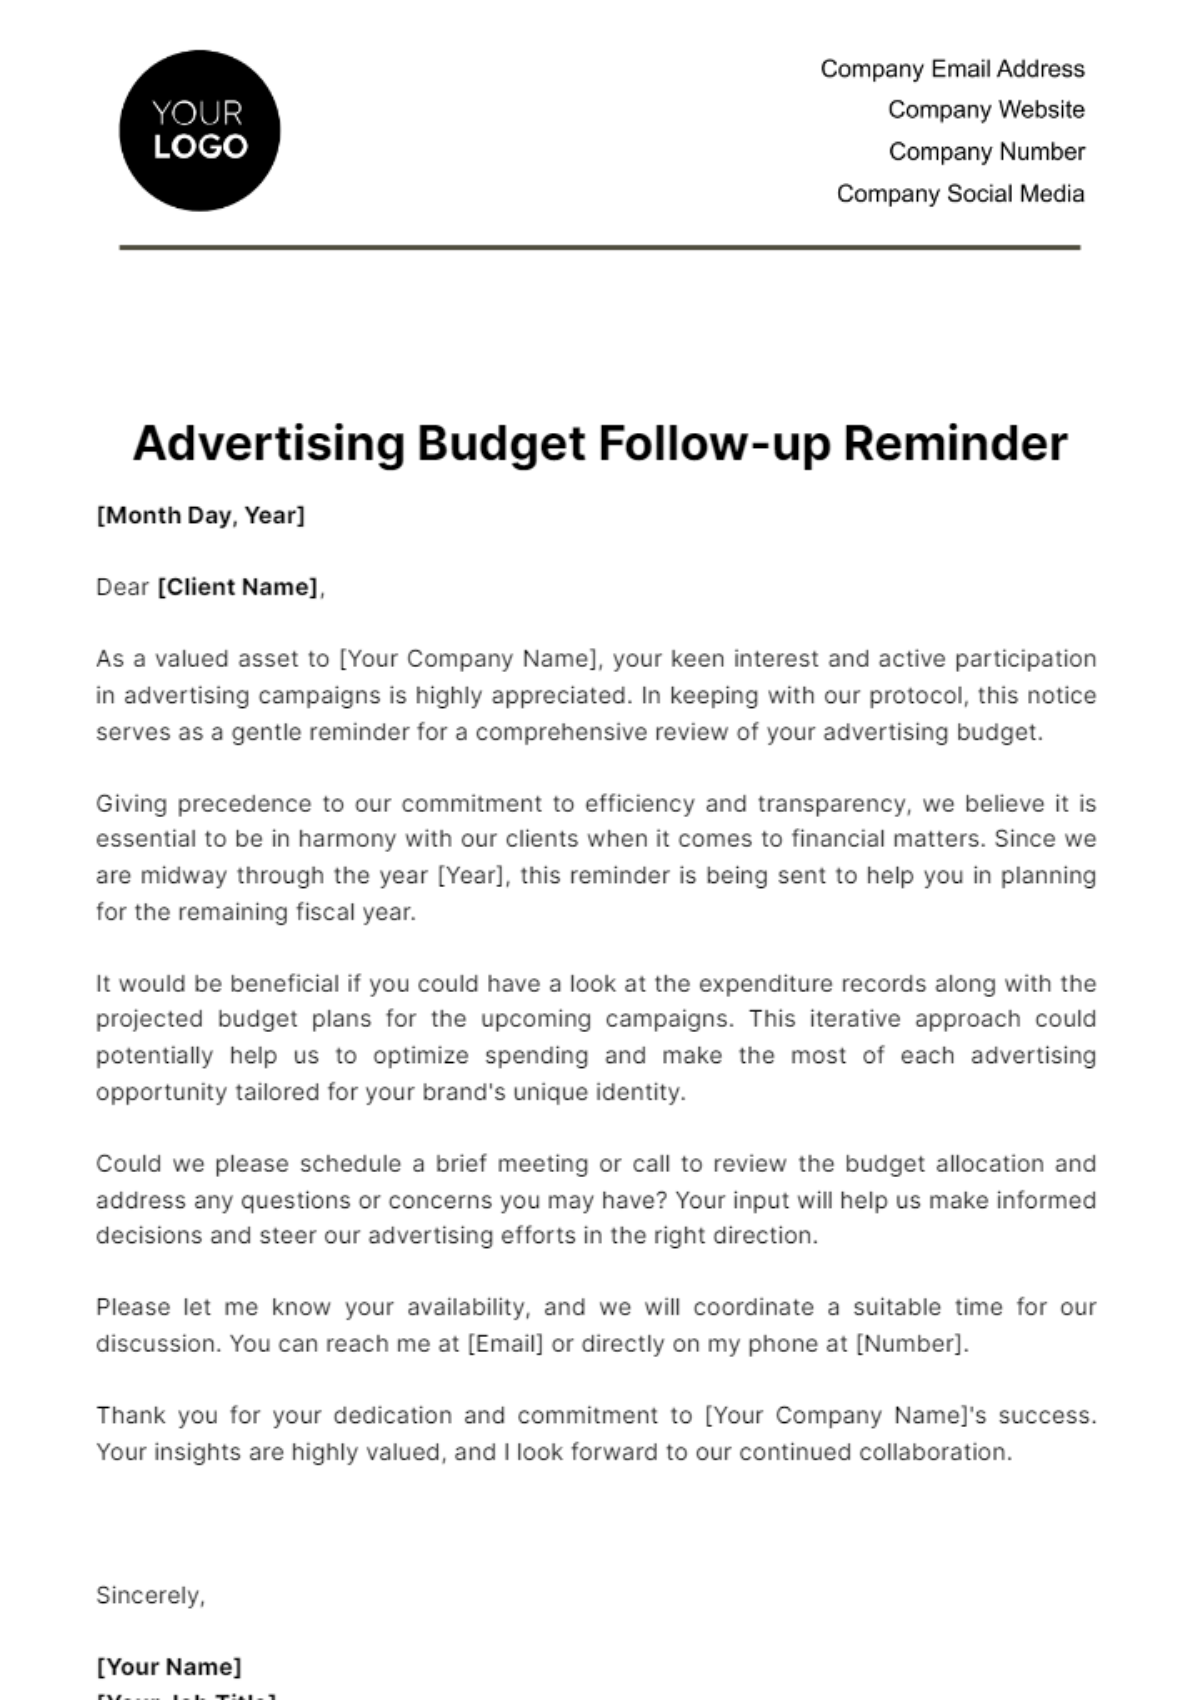 Advertising Budget Follow-up Reminder Template